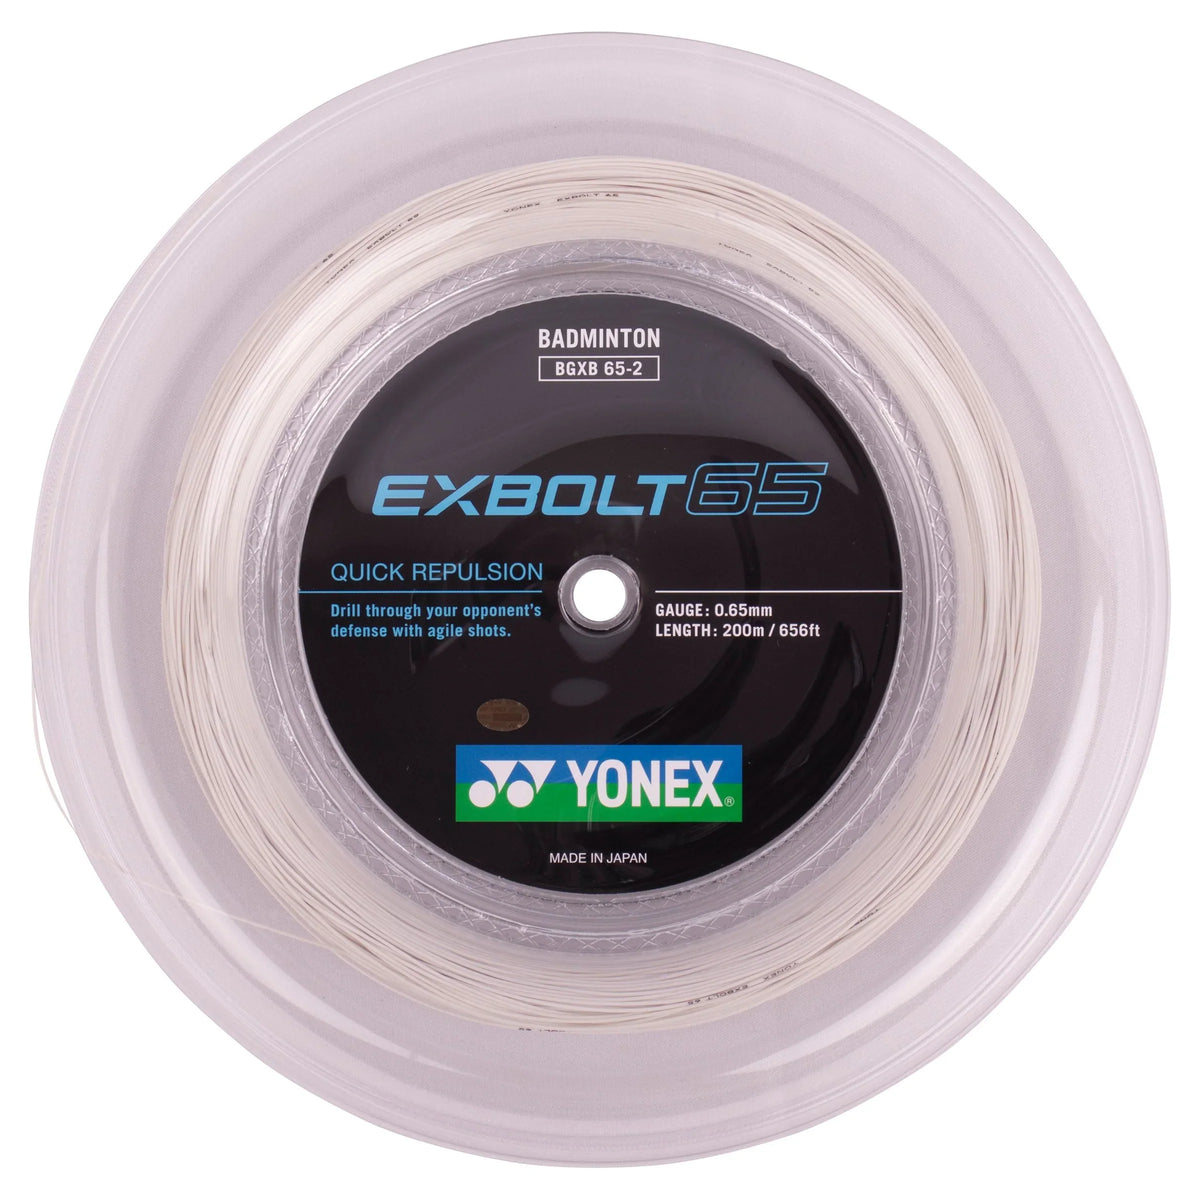 Yonex Exbolt 65 Badminton String [200m Reel]